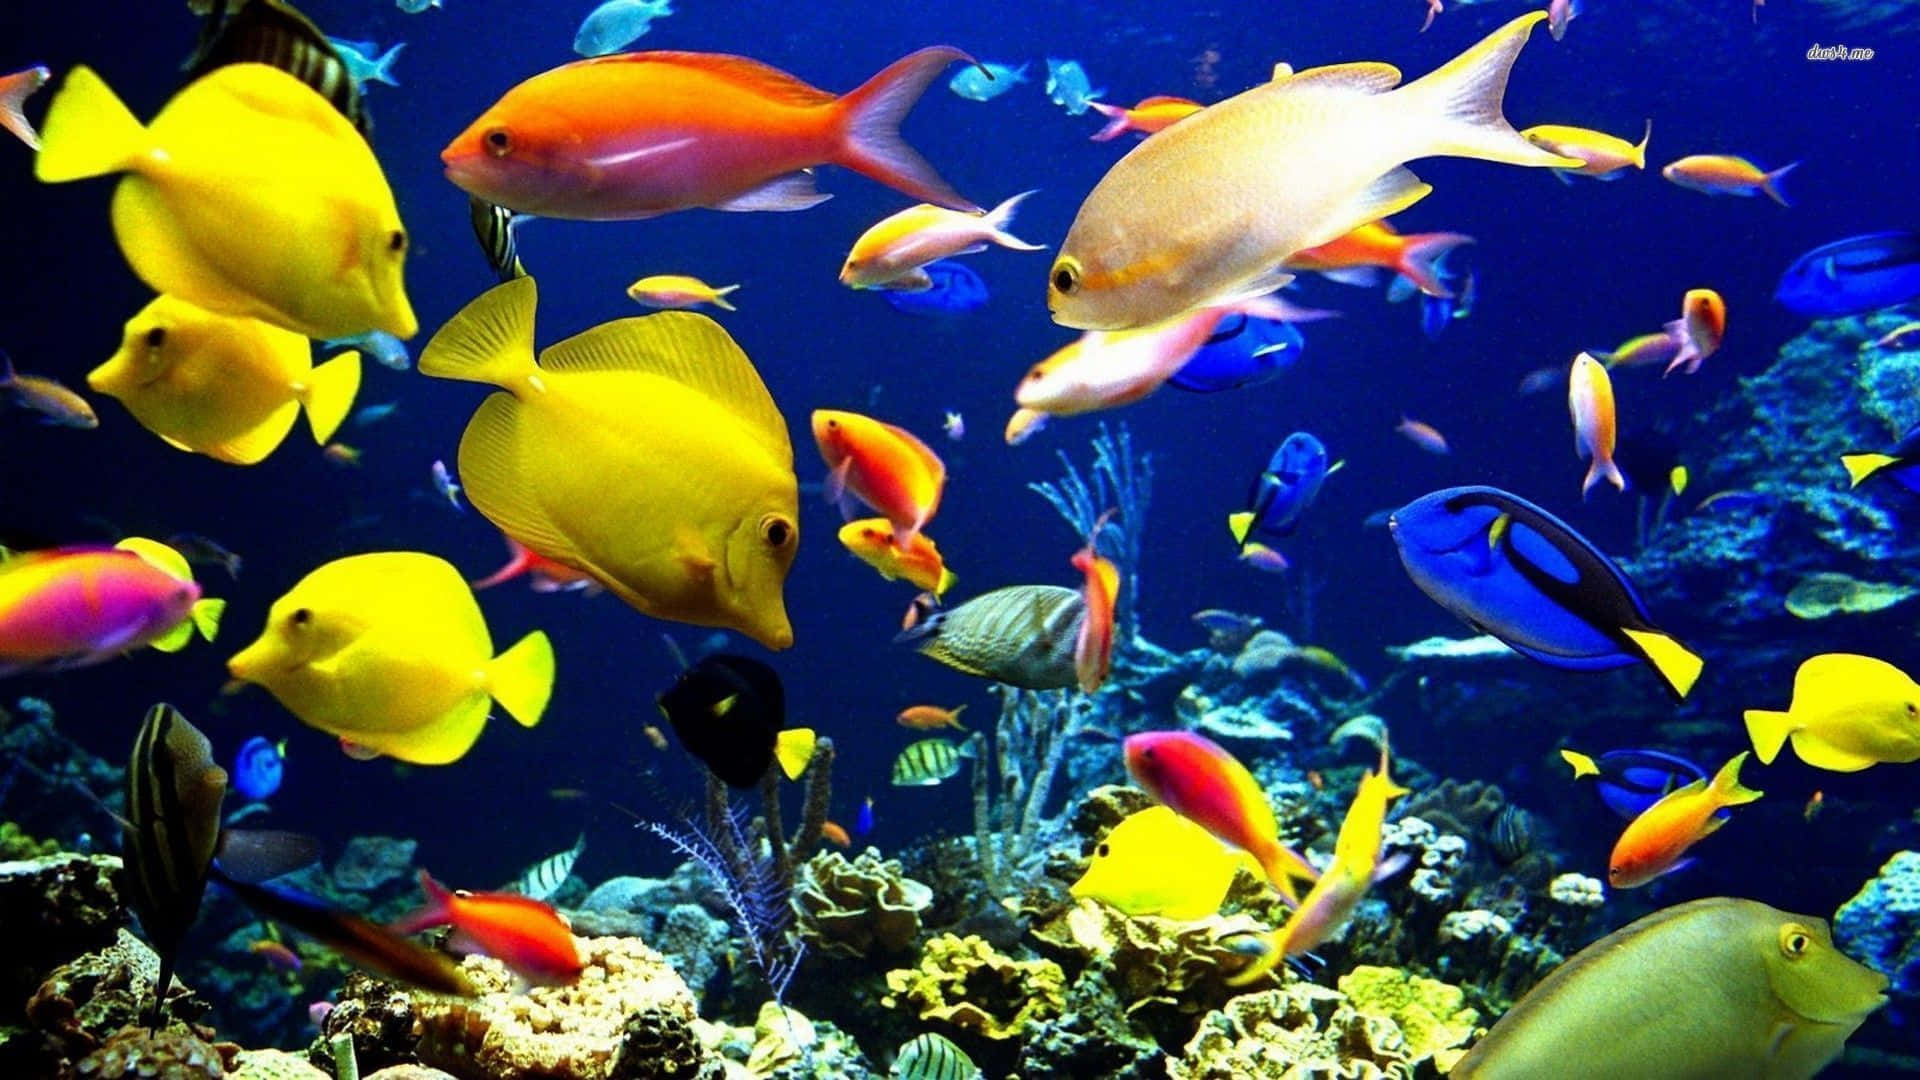 Mesmerizing 3D Fish Swimming in a Stunning Underwater Scene Wallpaper